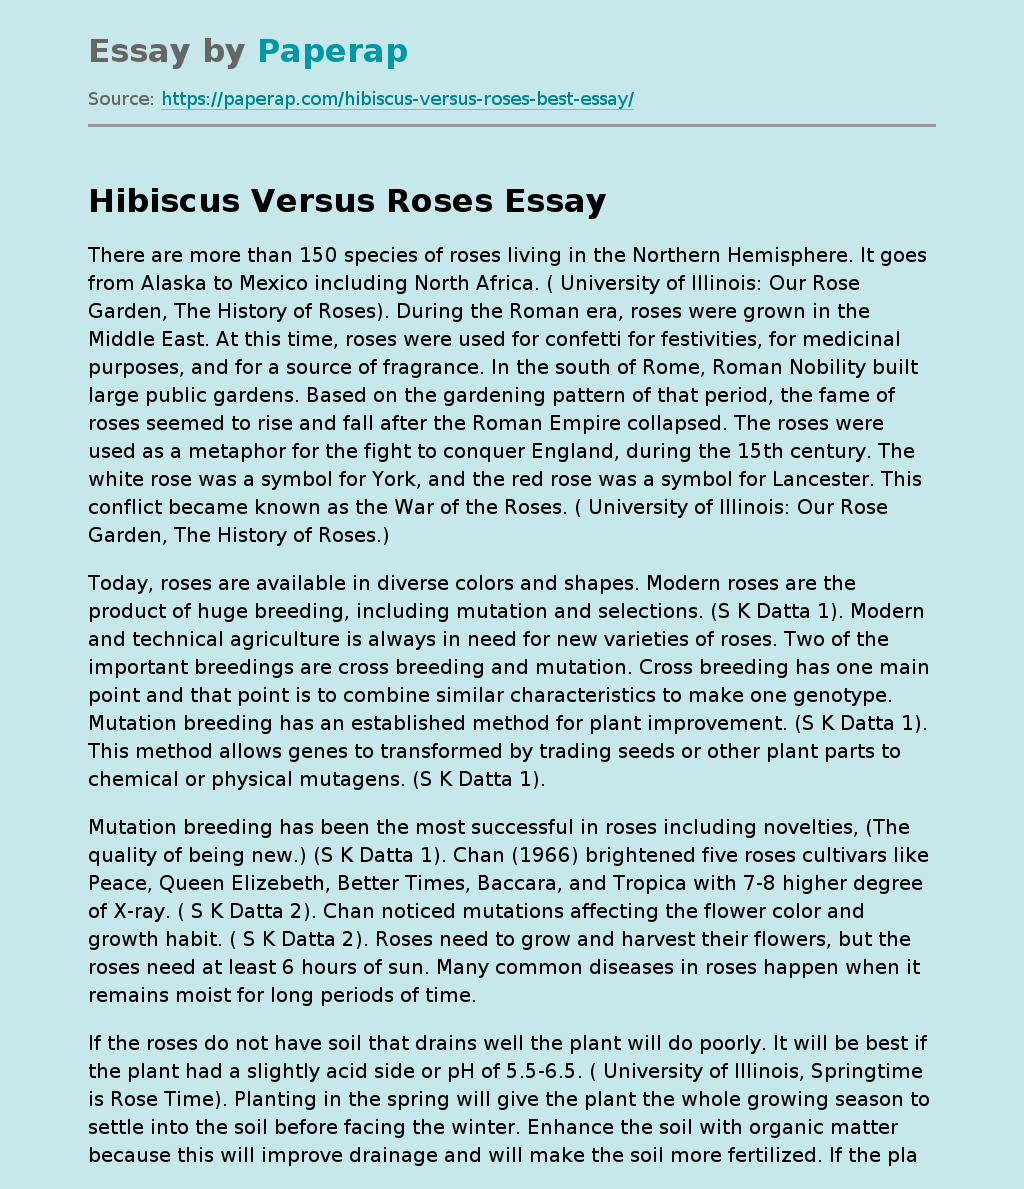 Origin and Care of Hibiscus and Rose